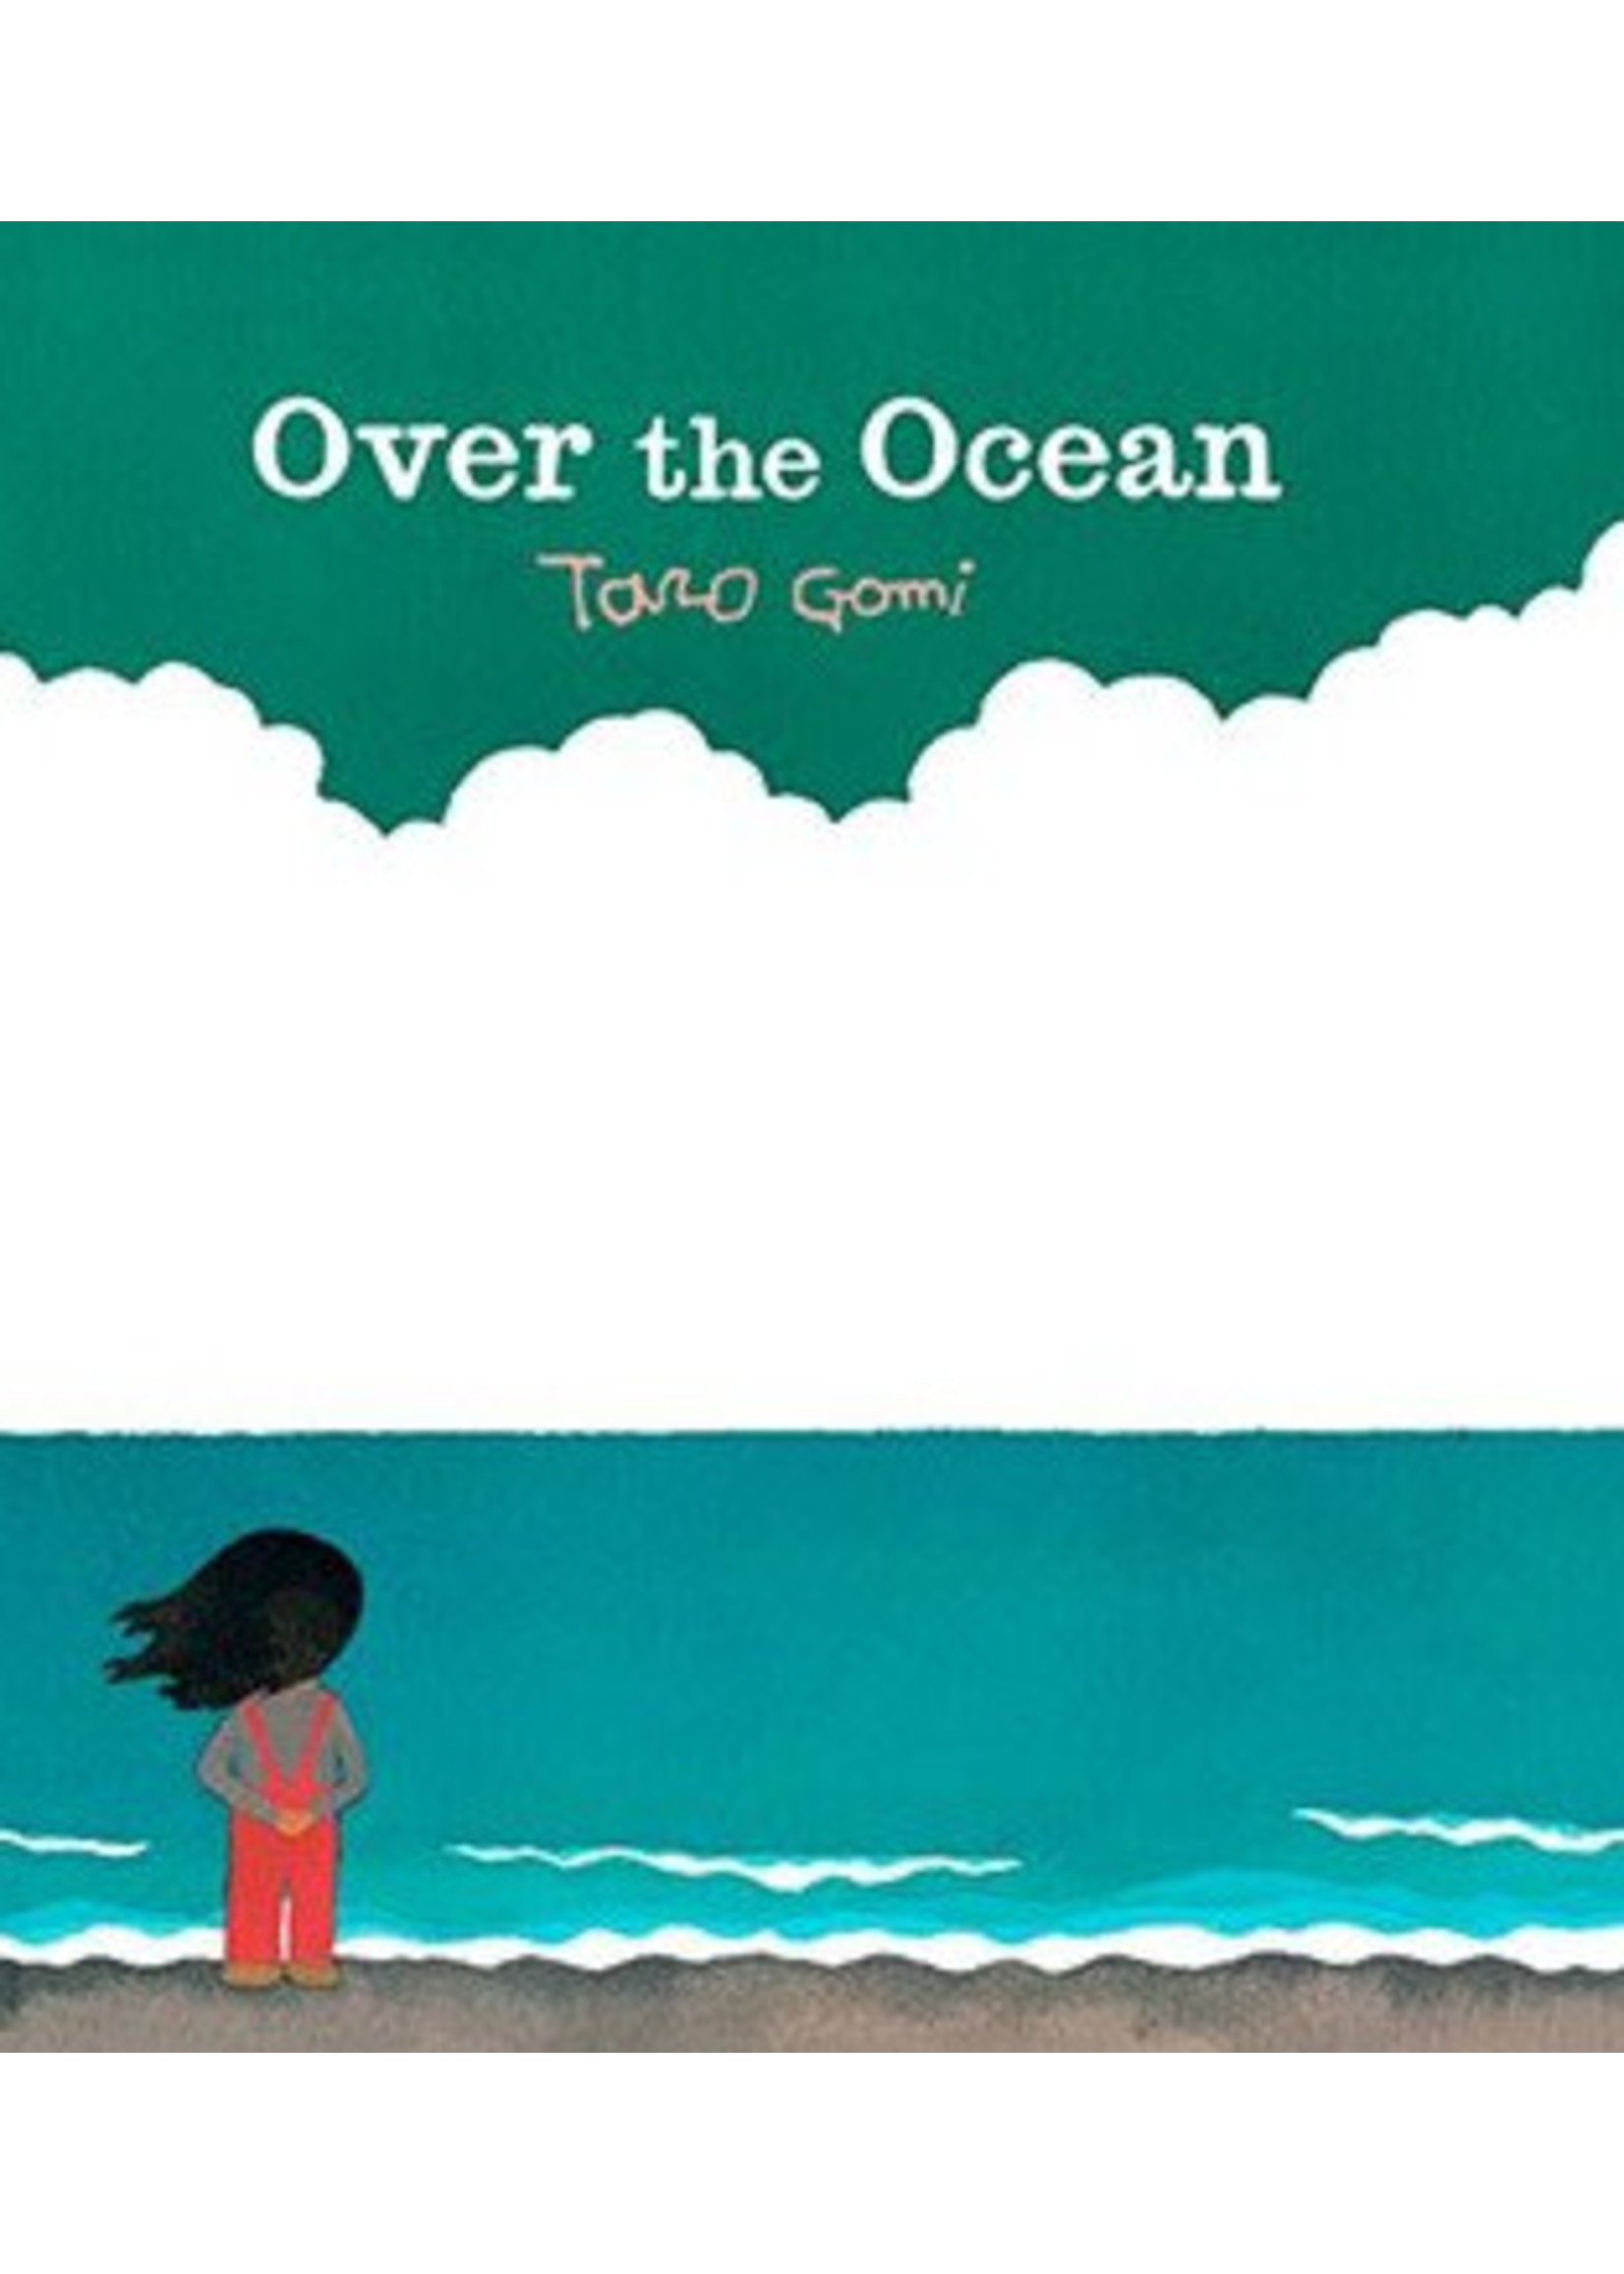 Over the Ocean by Taro Gomi